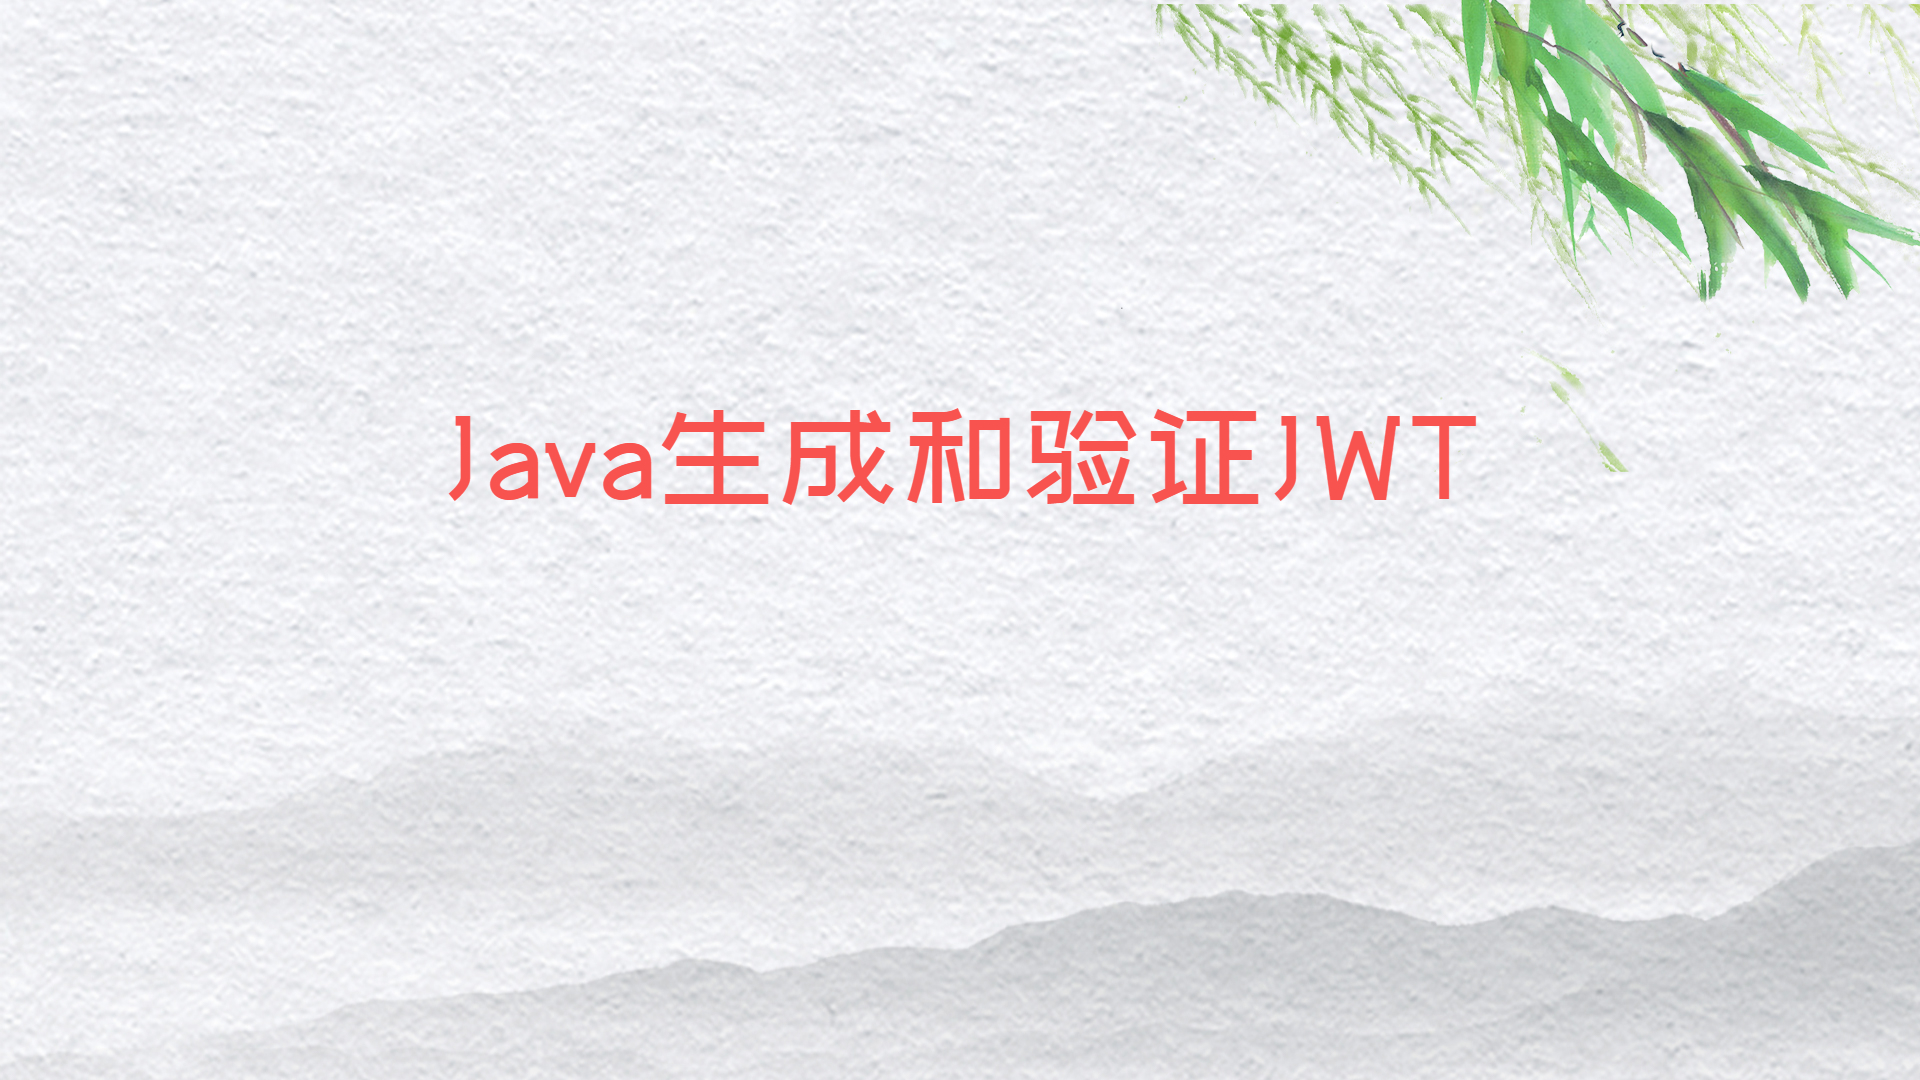 Java生成和验证JWT